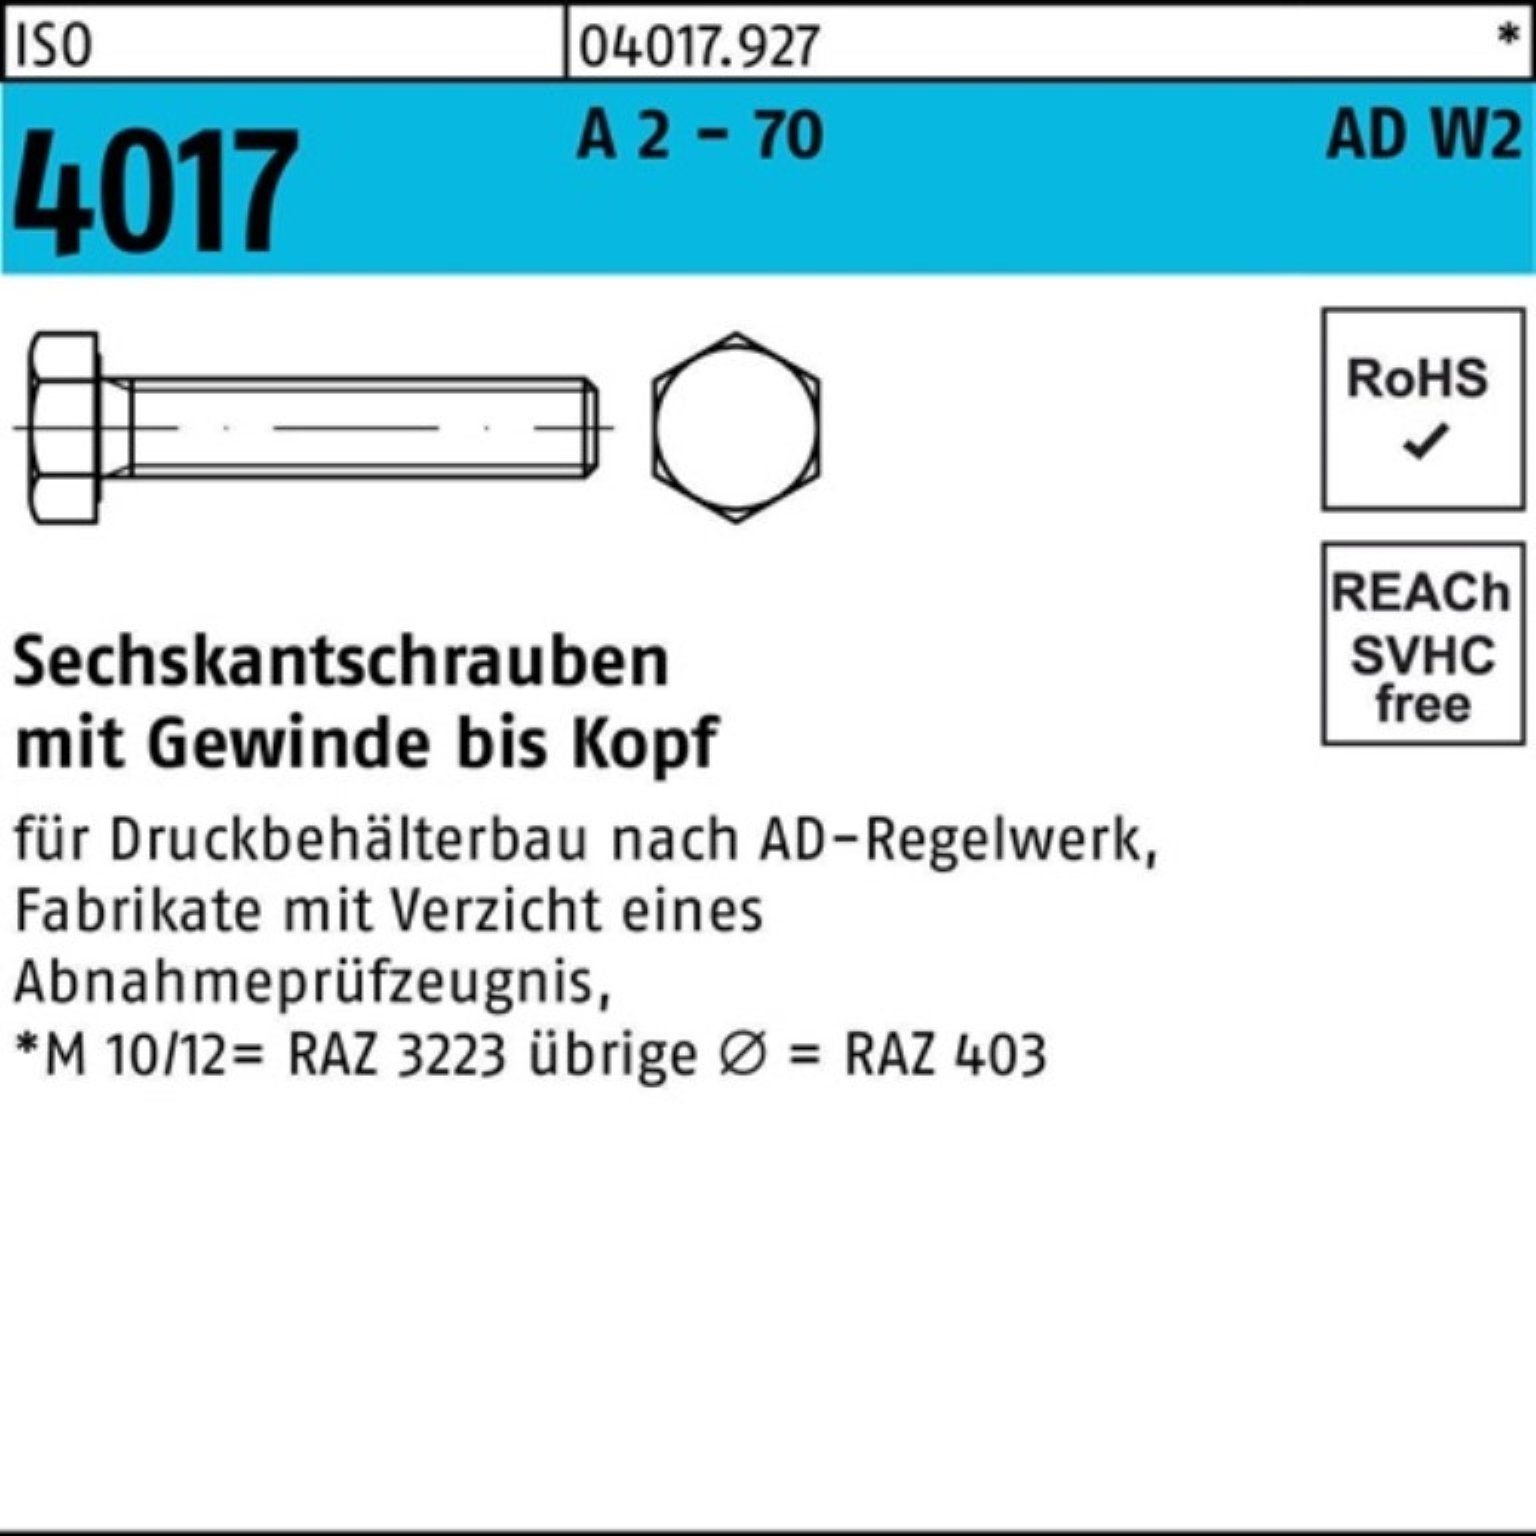 Bufab Sechskantschraube 100er Pack Sechskantschraube ISO 4017 VG M12x 30 A 2 - 70 AD-W2 50 St | Schrauben